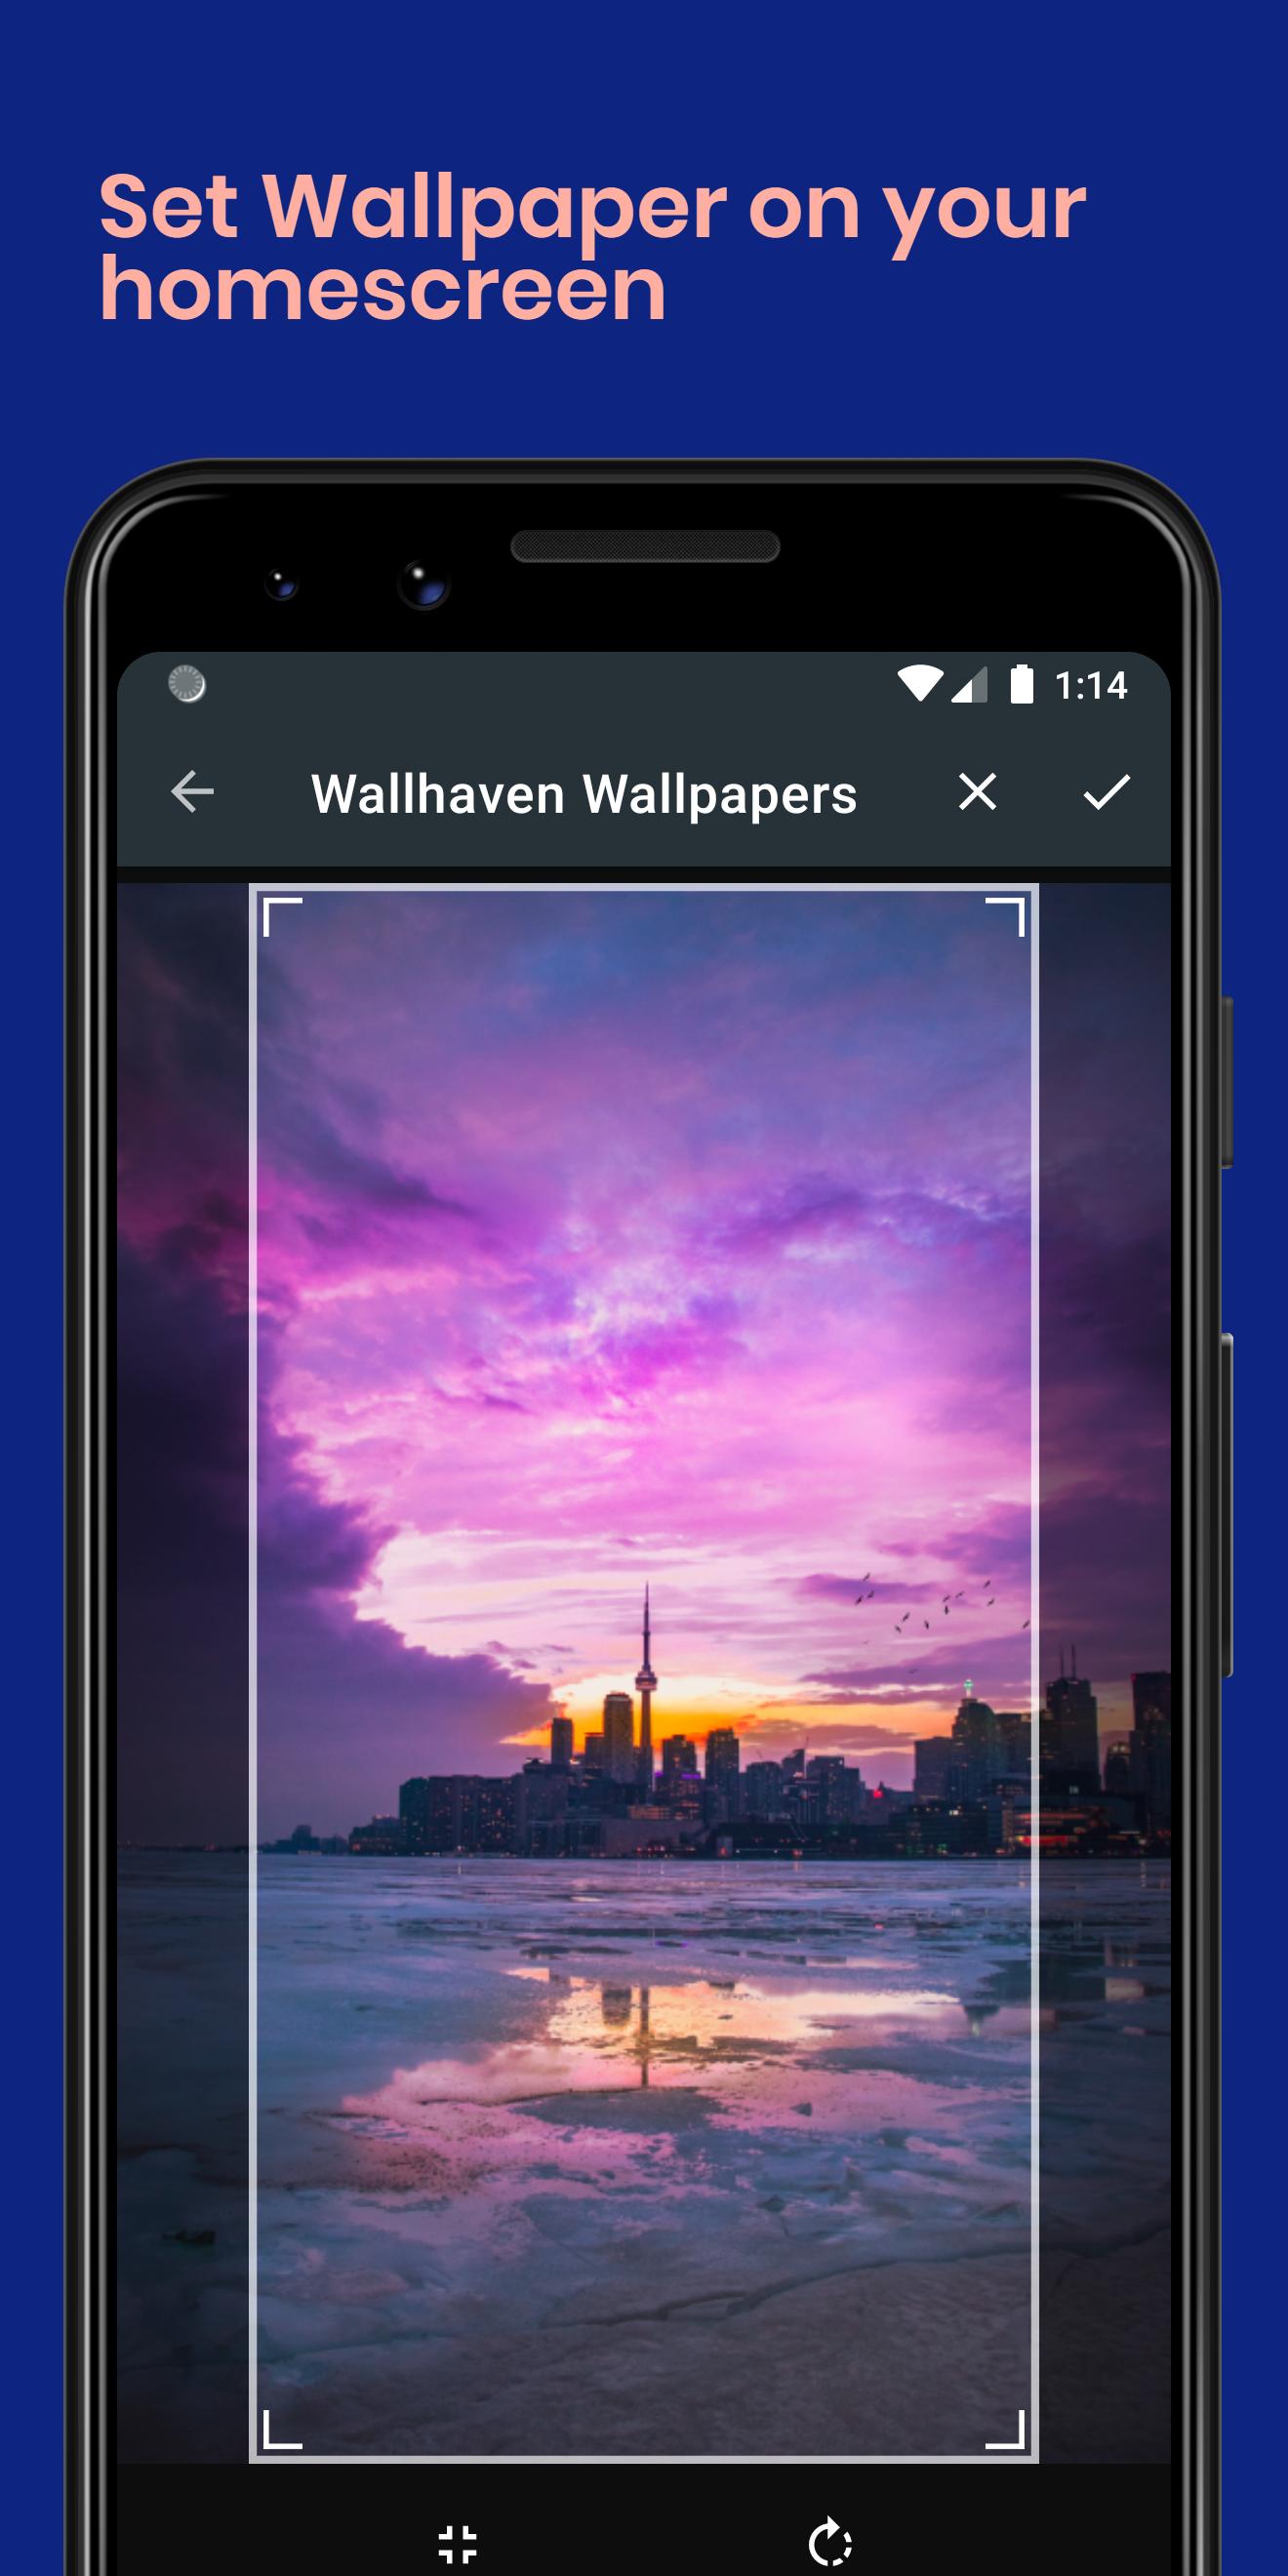 Wallhaven Wallpapers 3.3.1 Screenshot 4